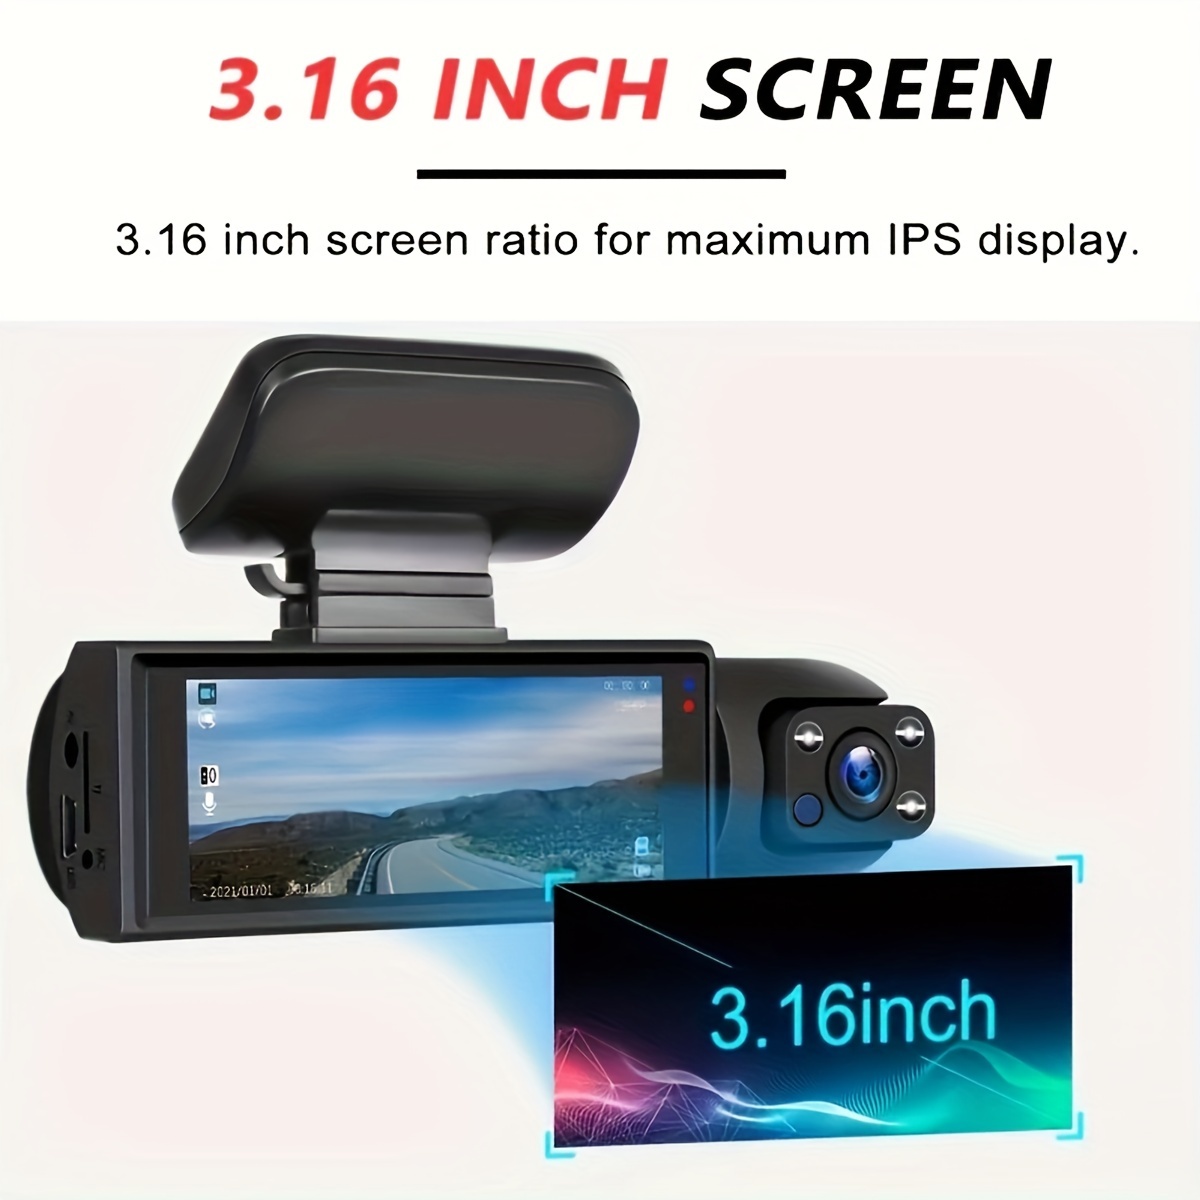 High Definition 1080p Dual Dashboard Camera